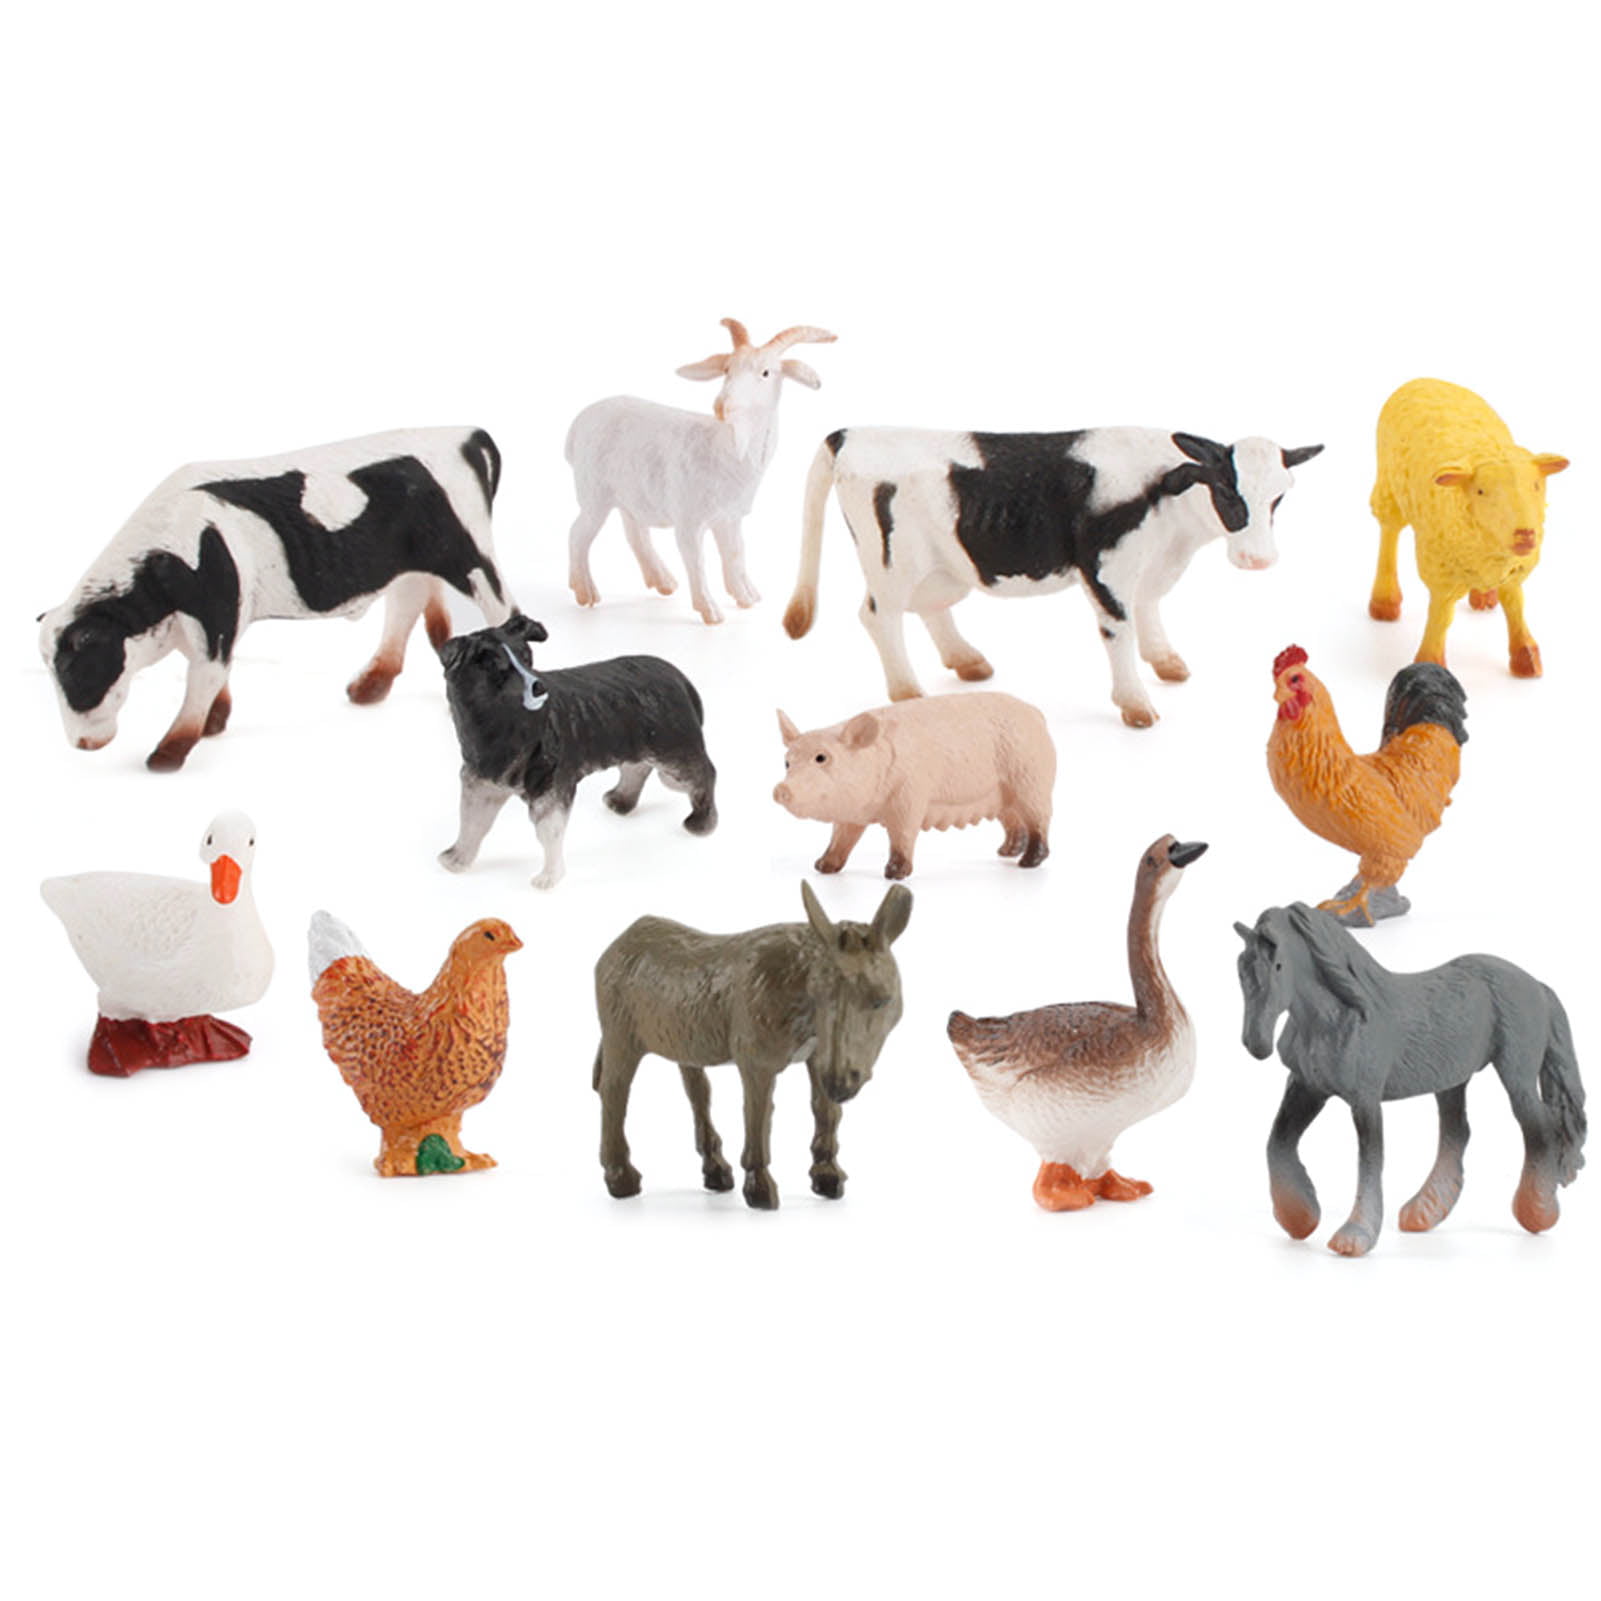 cake decorations New FARM toy animals set 12 small figurines play tuff spot 